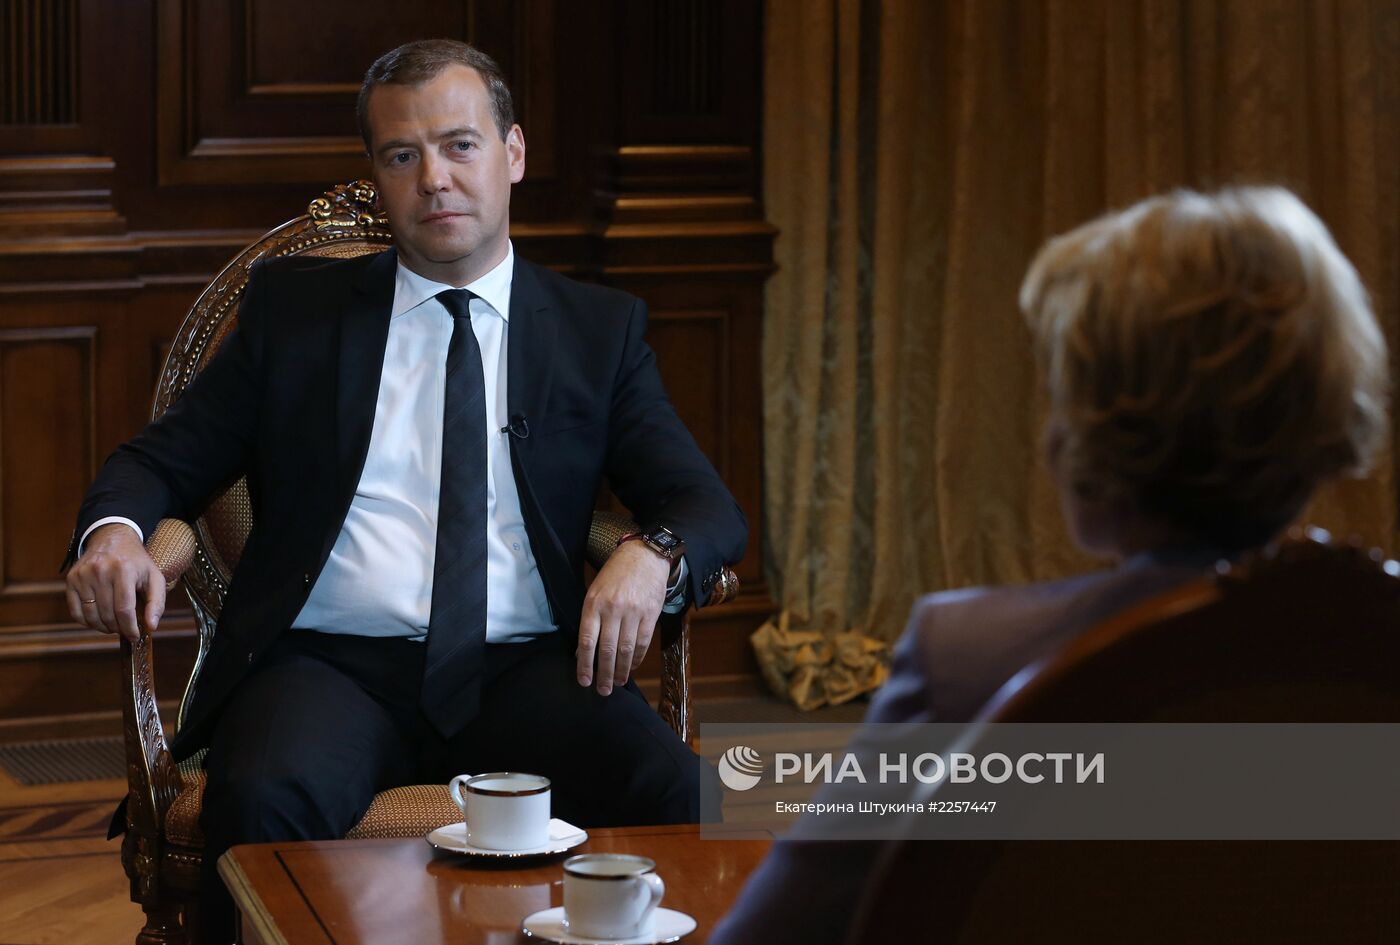 Интервью Д. Медведева телеканалу Russia Today